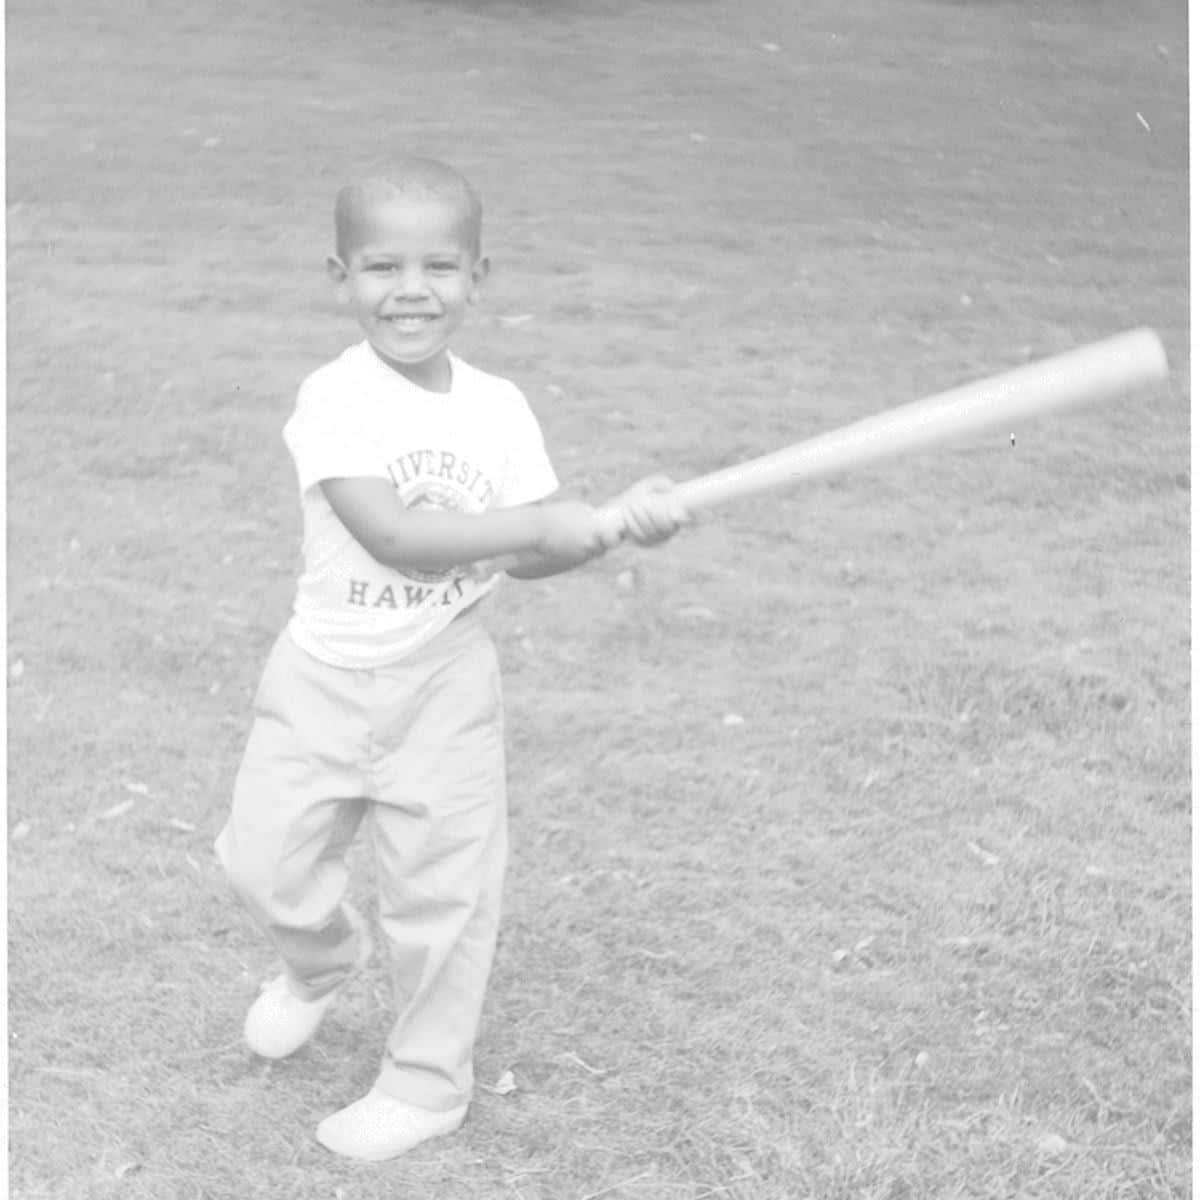 Barack Obama playing baseball as a child